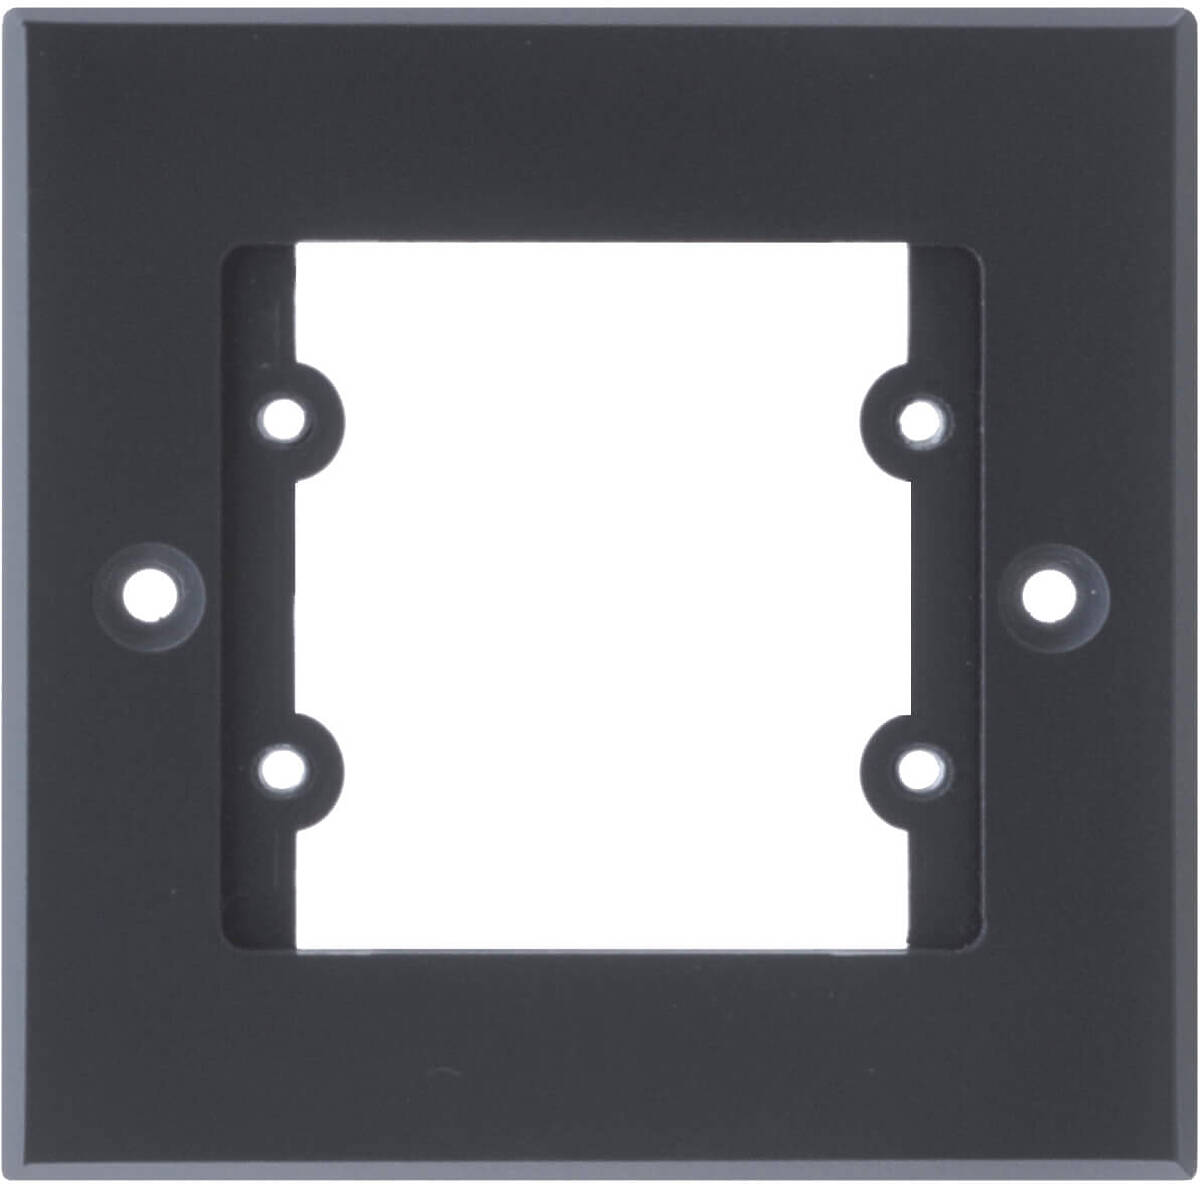 Kramer FRAME-1GP-86(B) 1-gang EU/UK size design frame for mounting 2 wall plate inserts finished in grey product image. Click to enlarge.